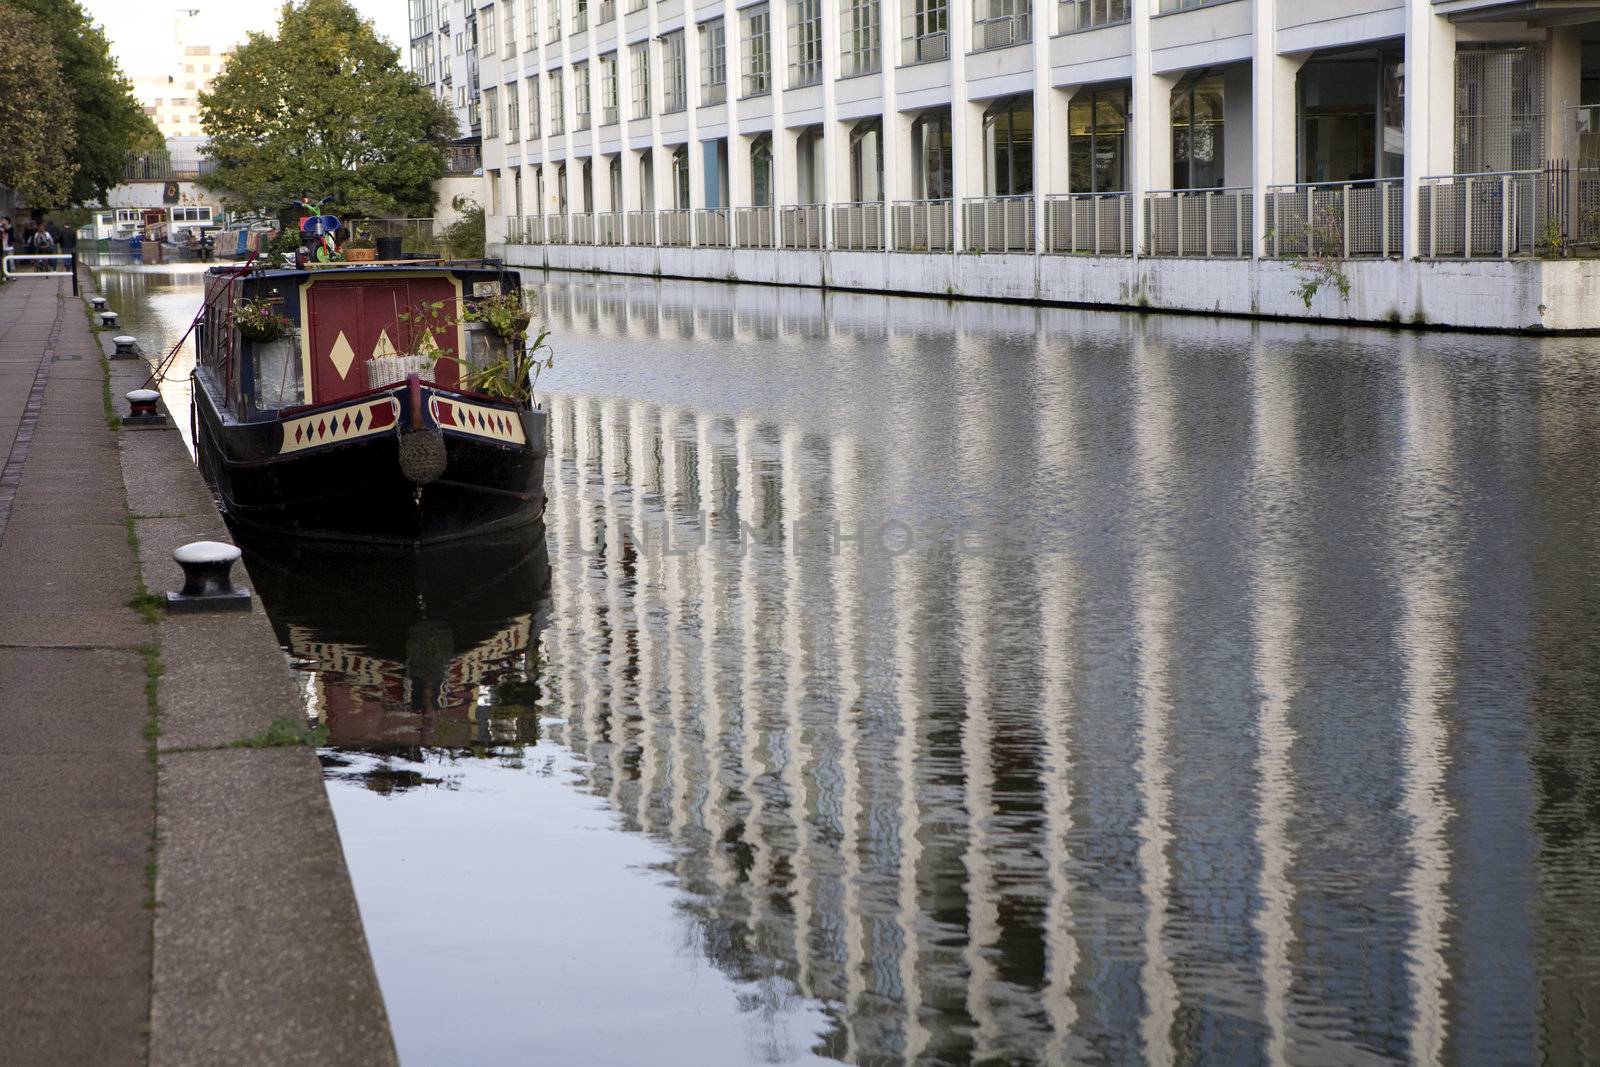 Boat. Regent canal. Shoreditch. London by elenarostunova